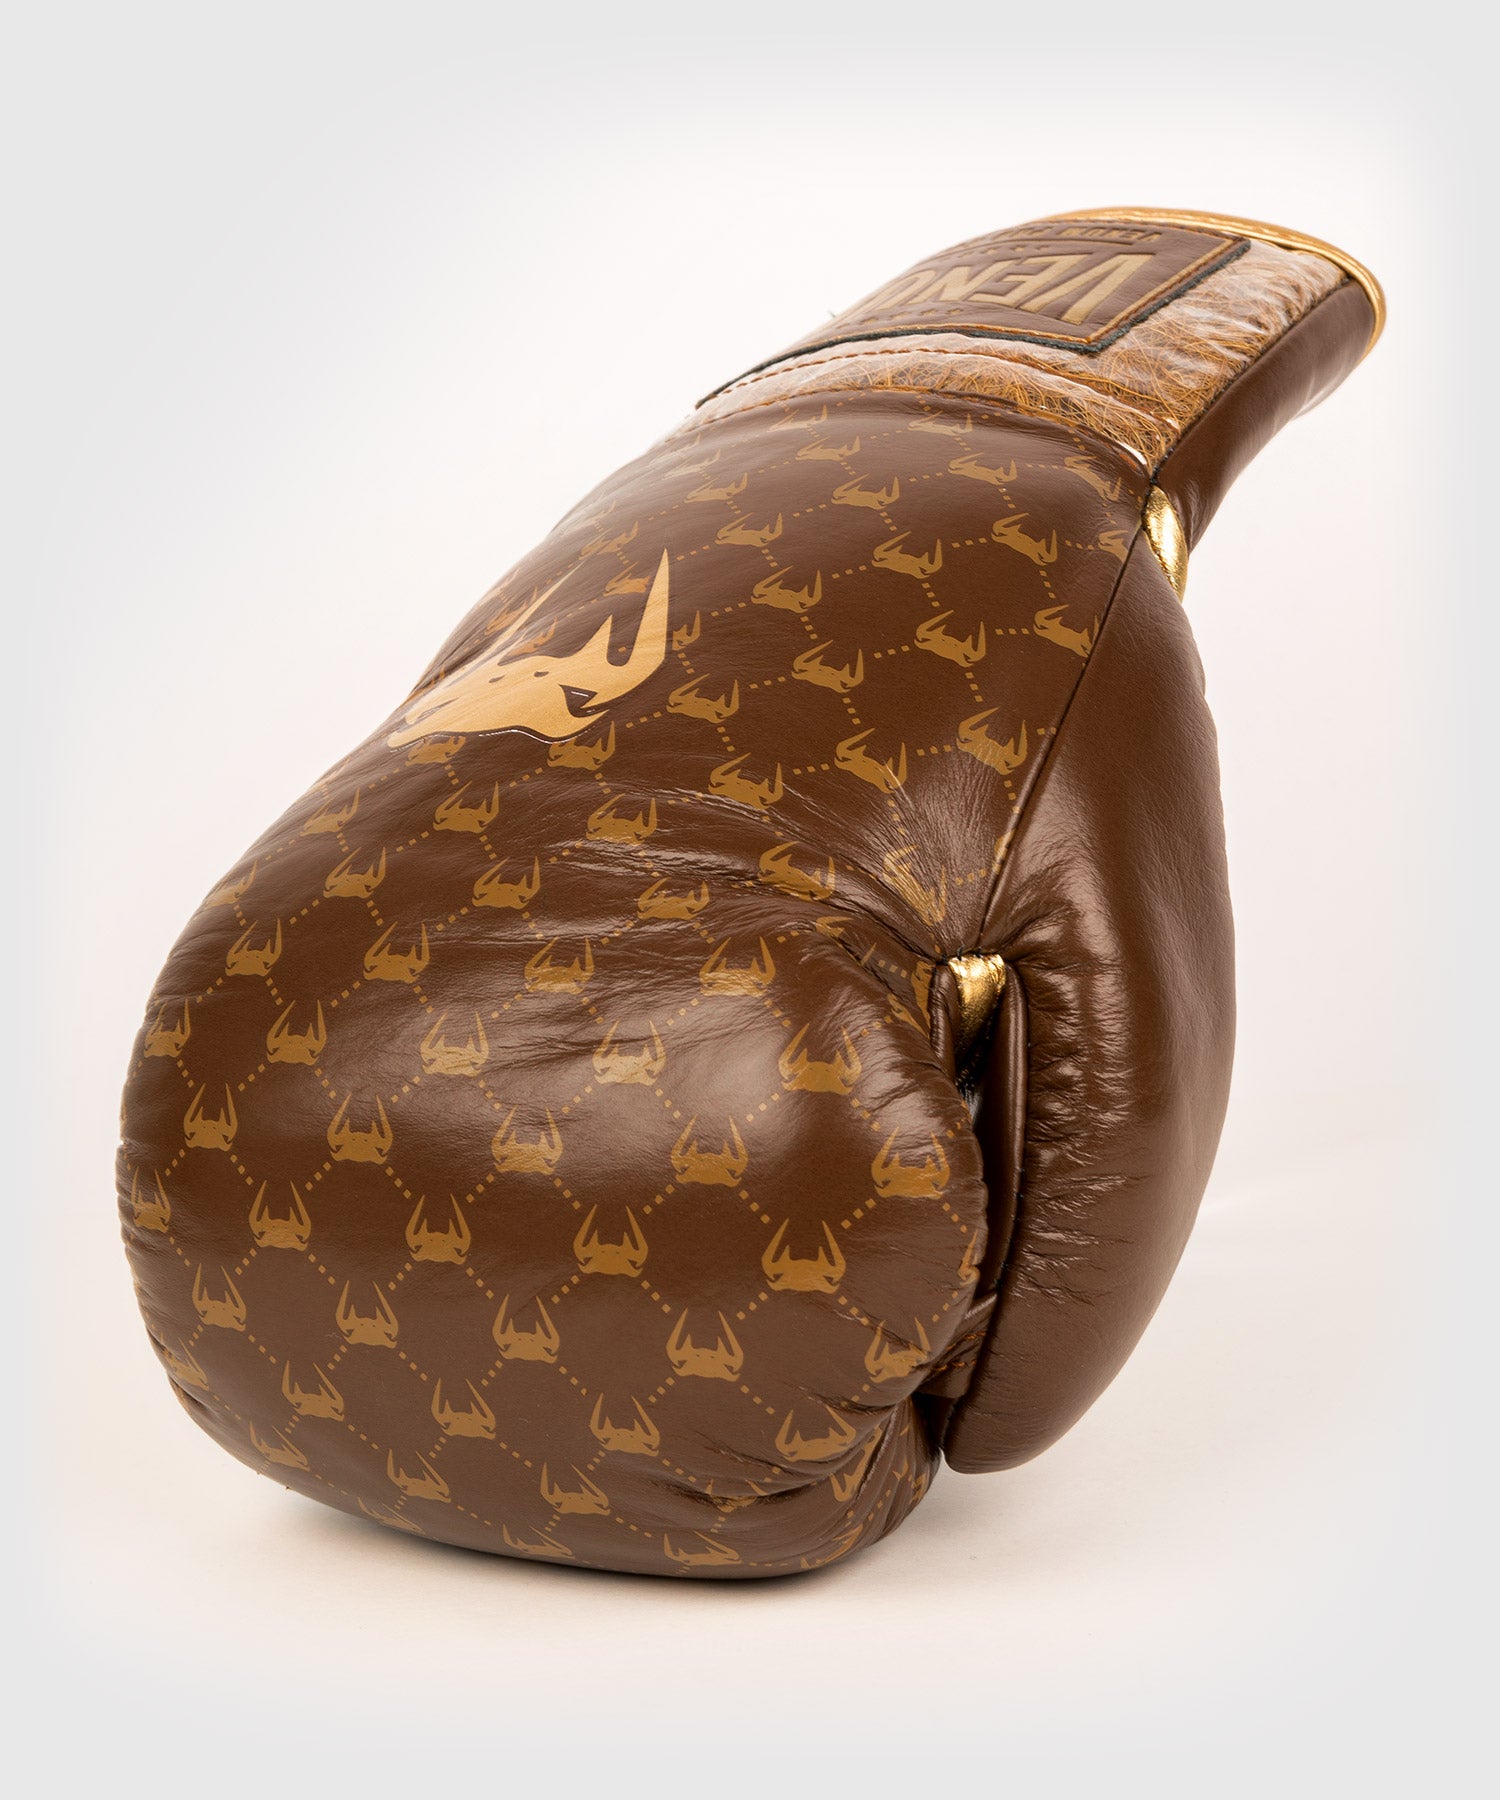 Brown Limited Edition Celebrating Monogram Boxing Gloves Set in